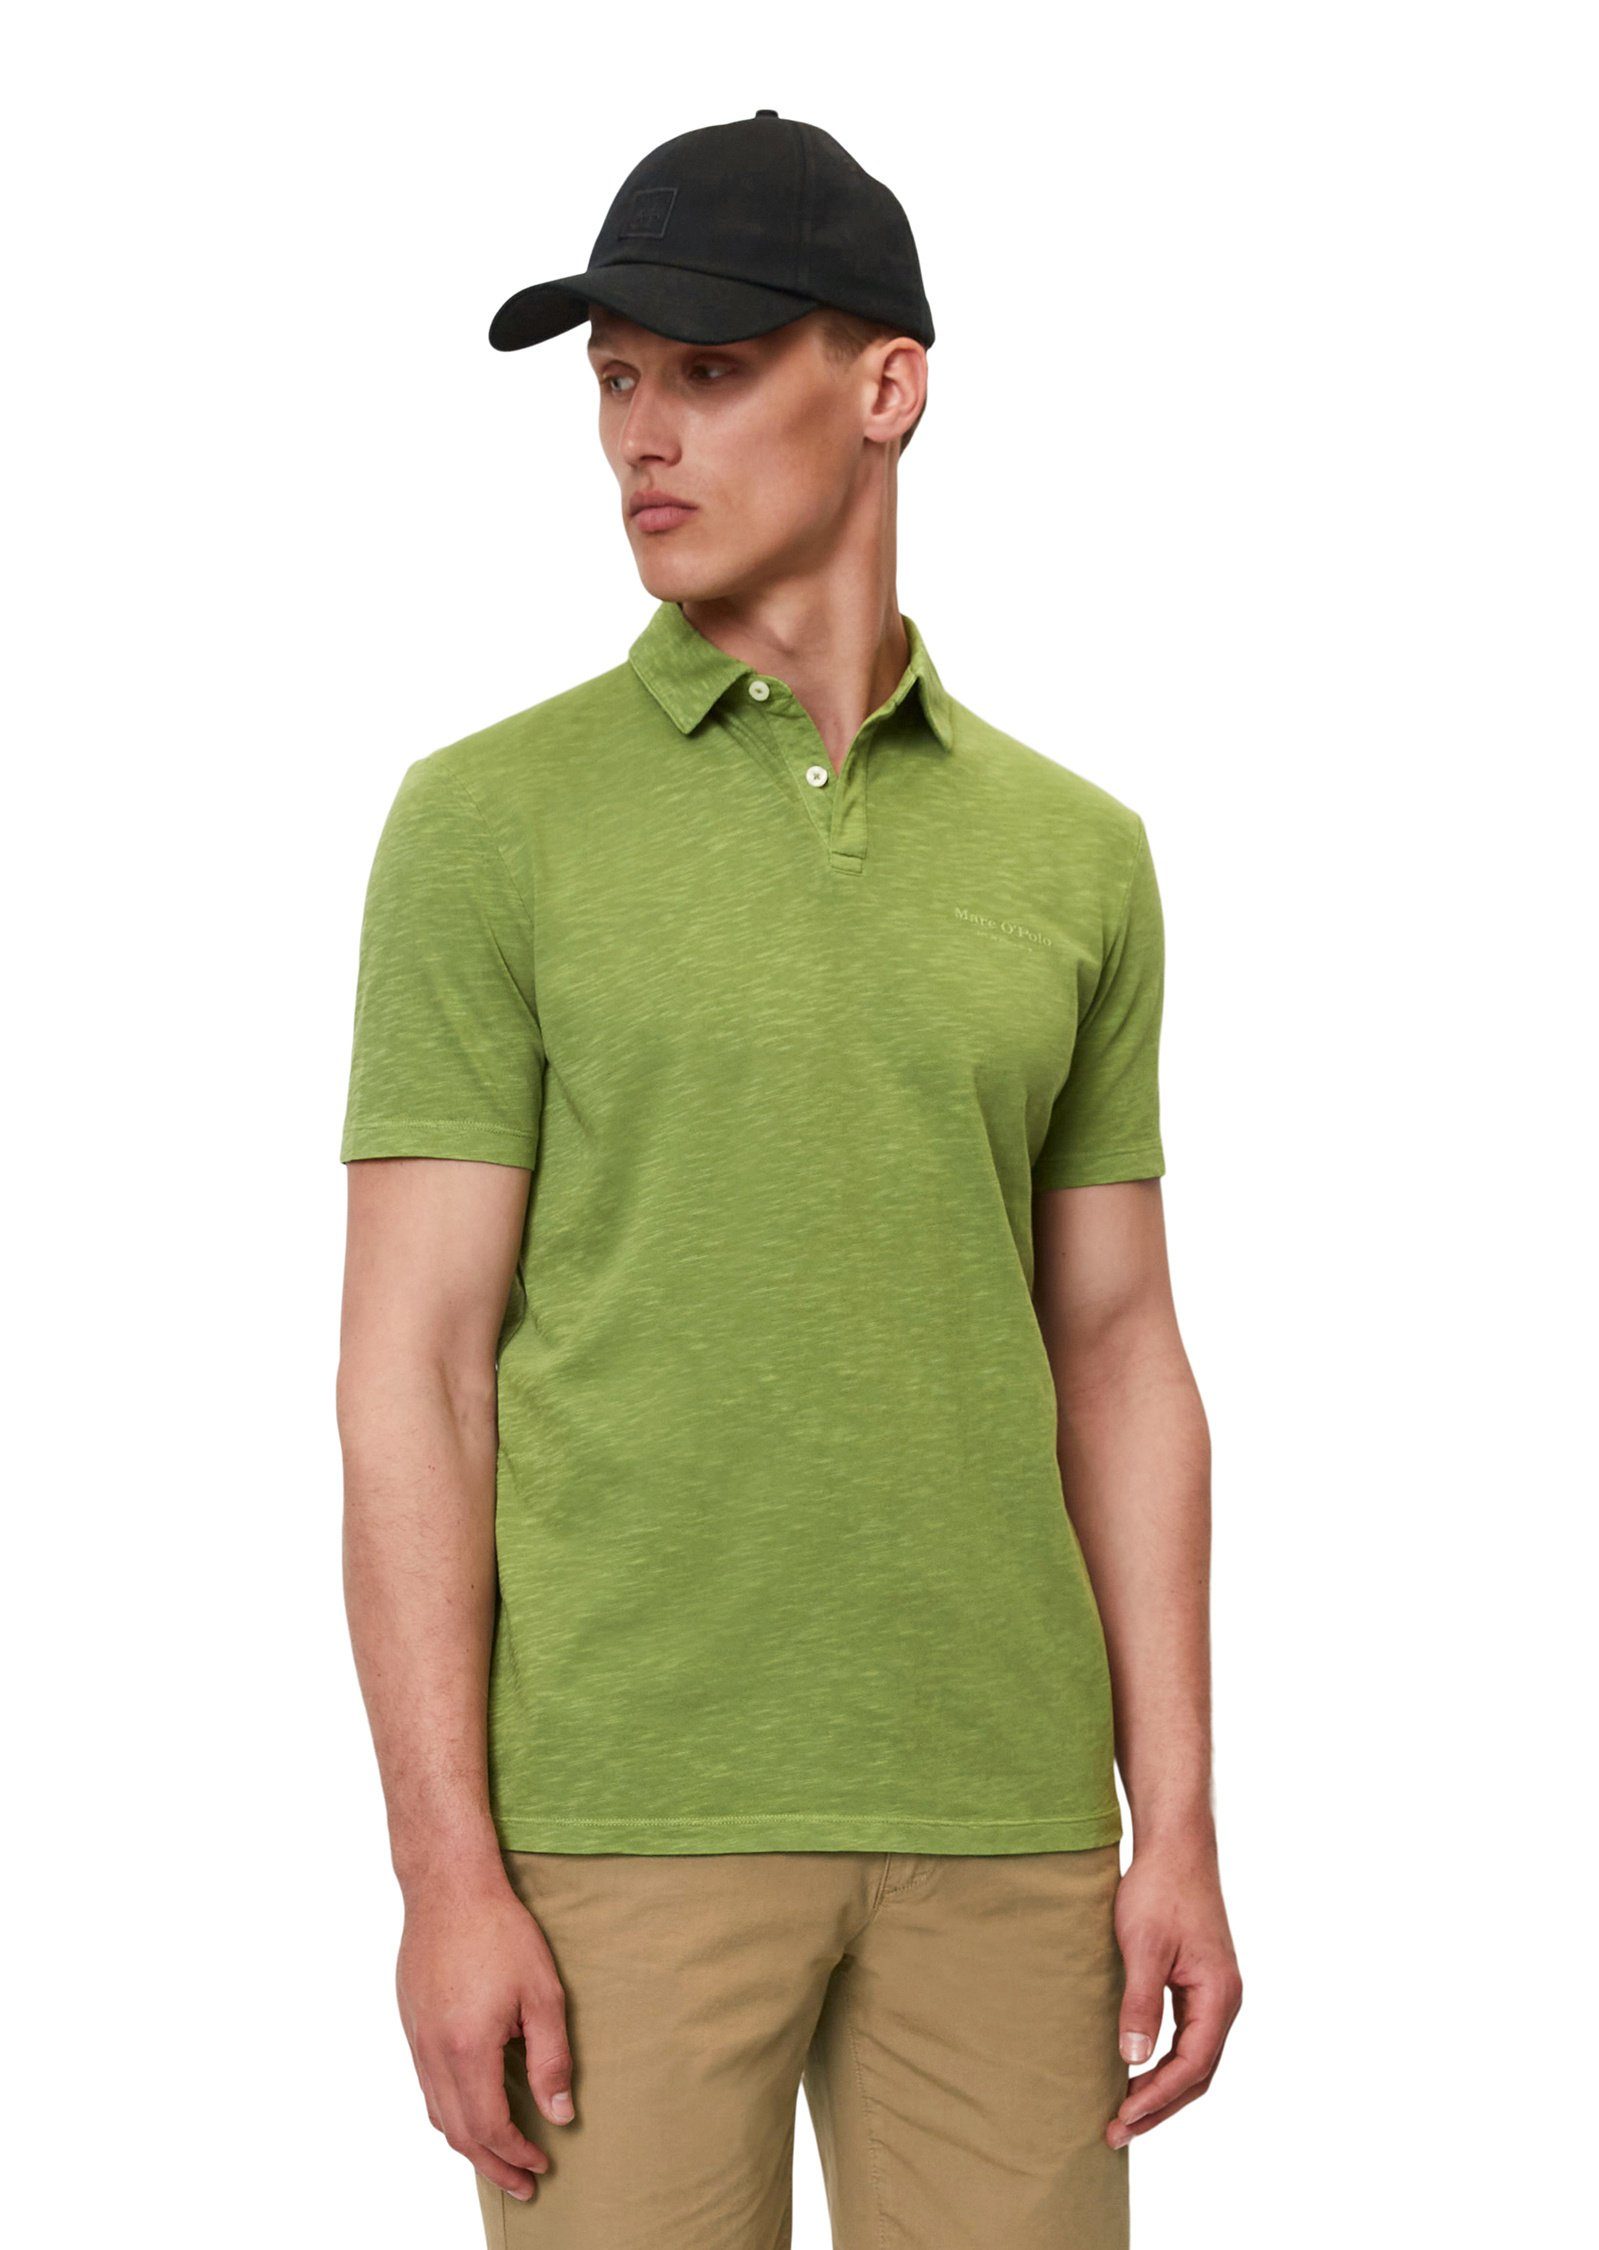 Marc O'Polo Poloshirt grün aus hochwertiger Bio-Baumwolle